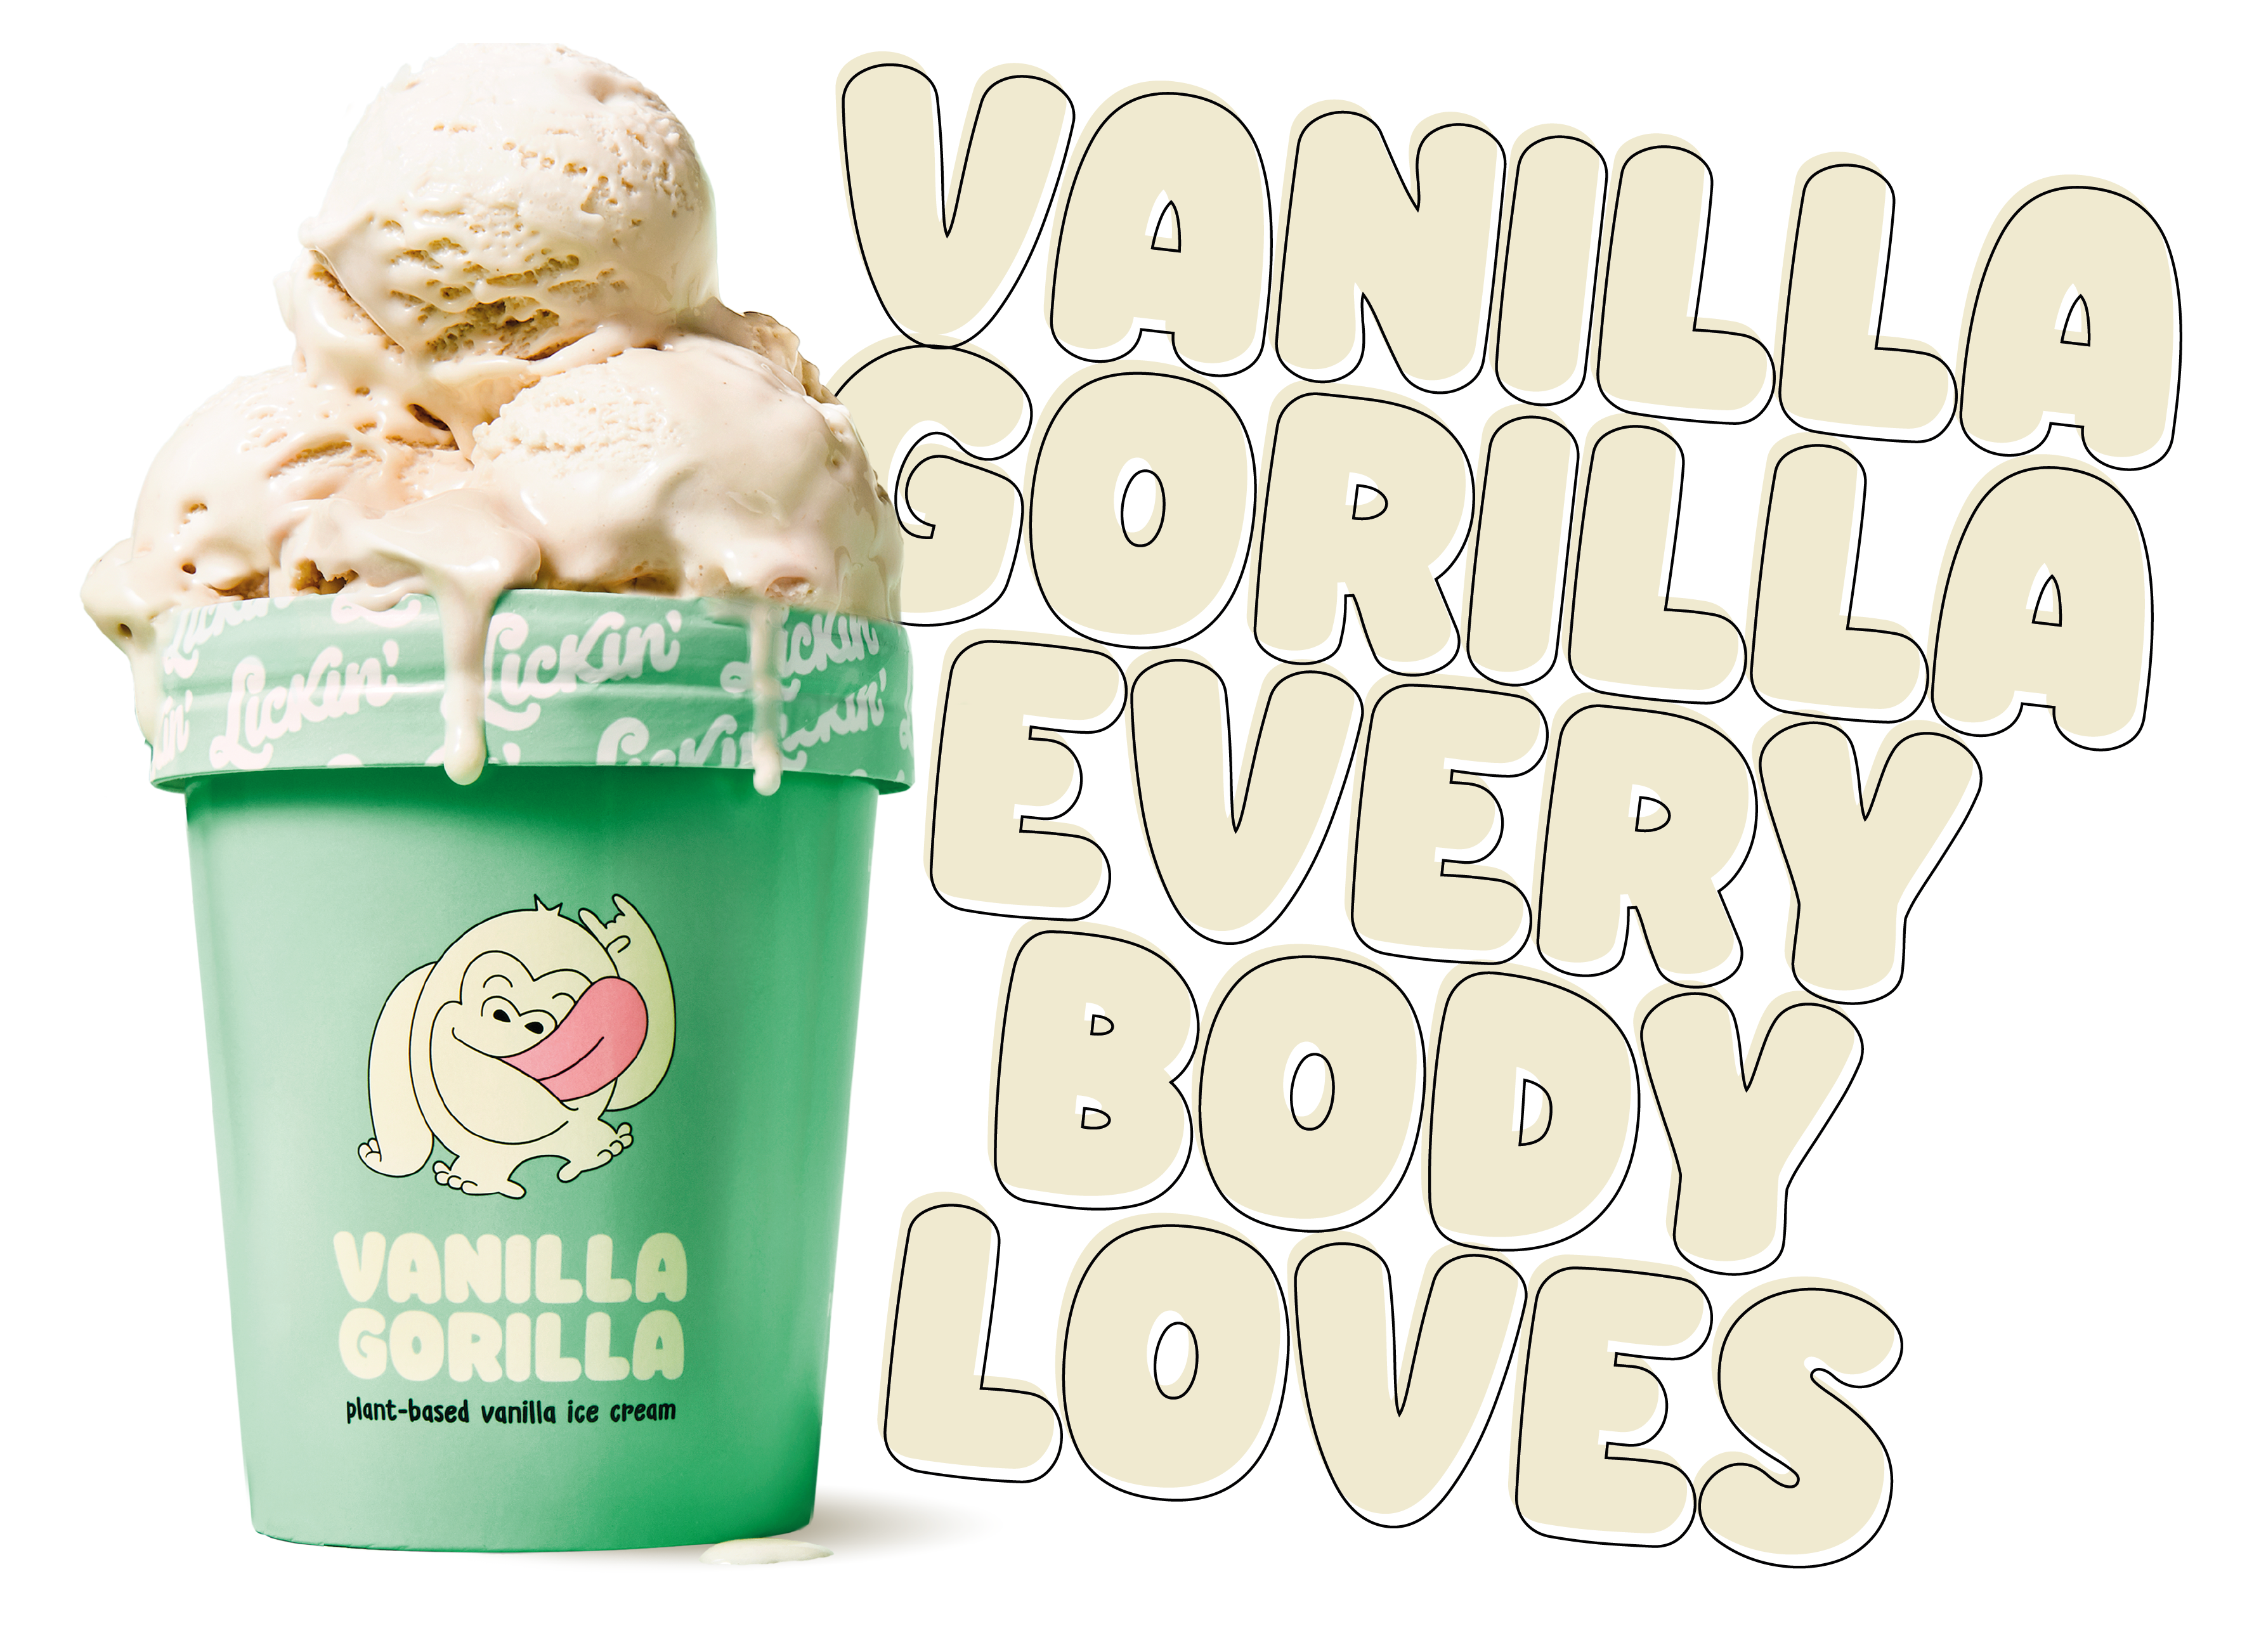 The Lickin' Company vanilla gorilla